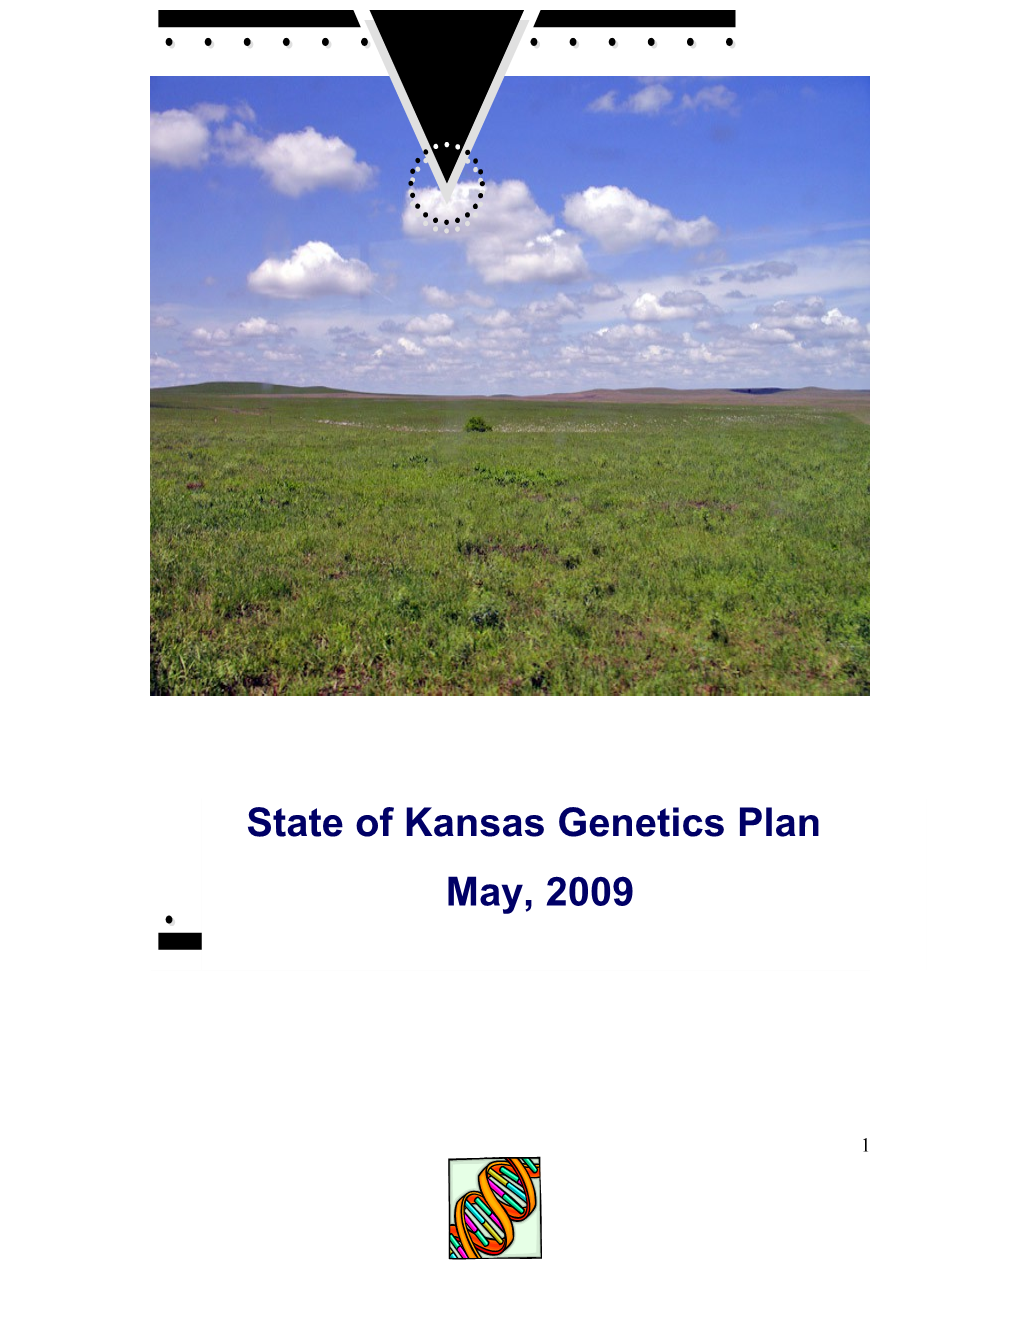 State Plan for Genetic Services Inkansas